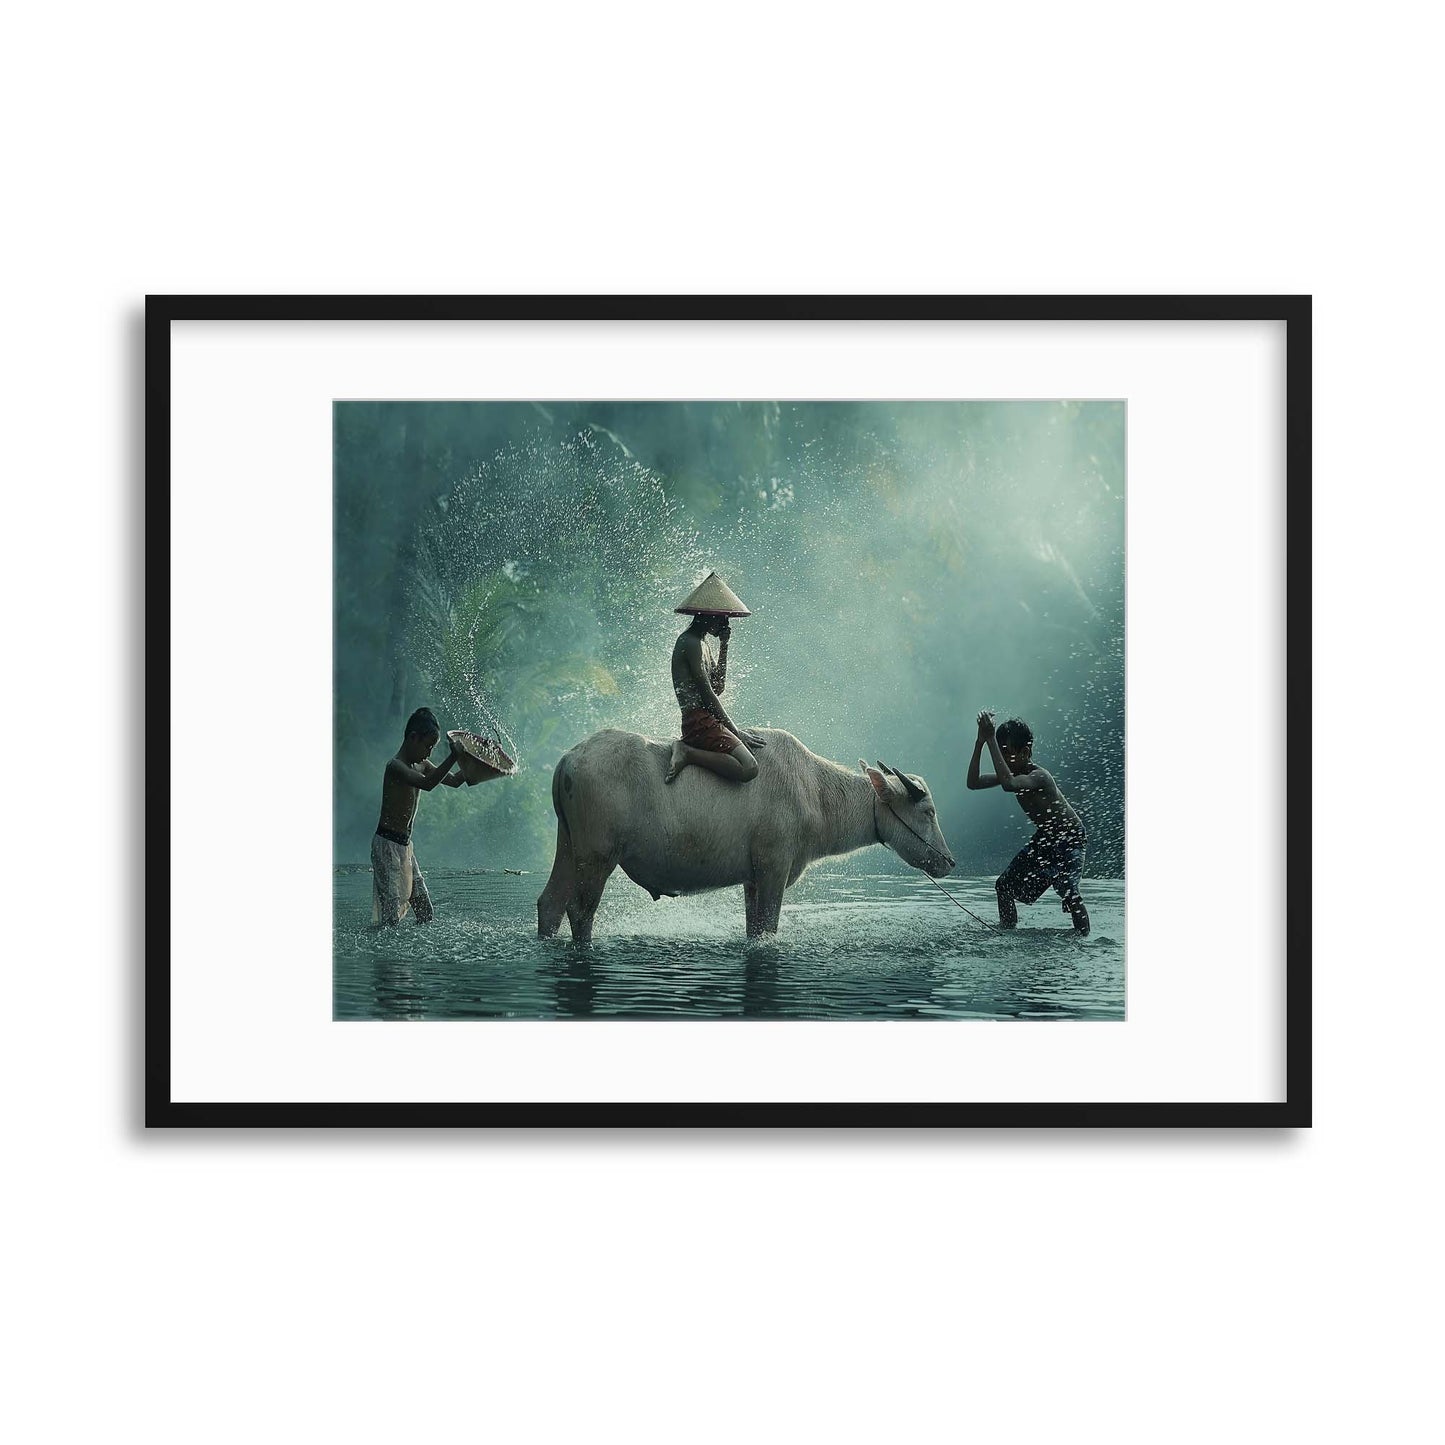 Water Buffalo by Vichaya Framed Print - USTAD HOME